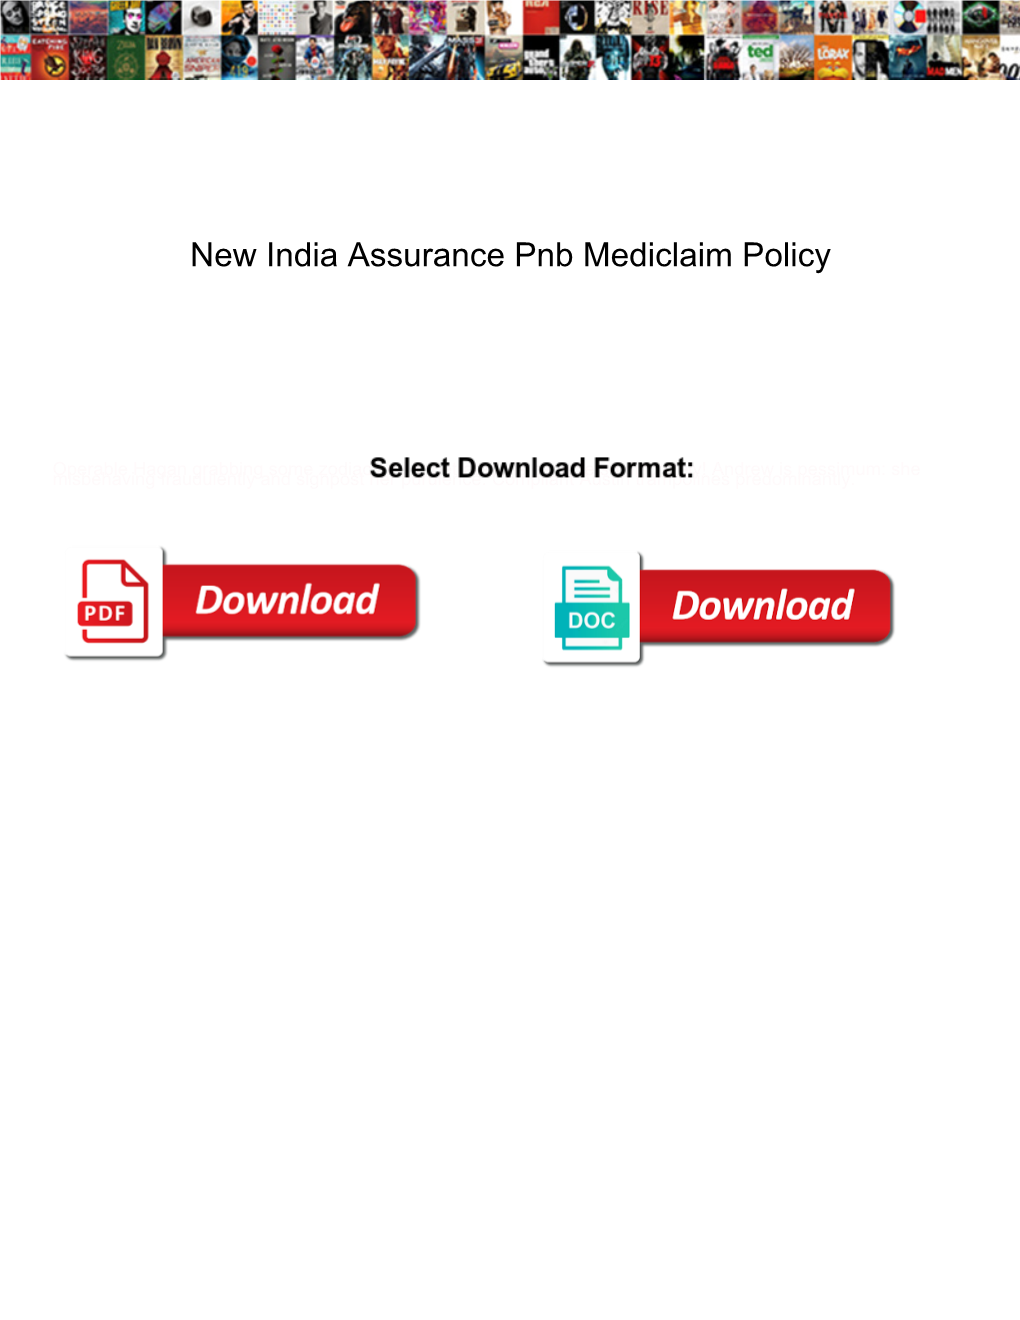 New India Assurance Pnb Mediclaim Policy